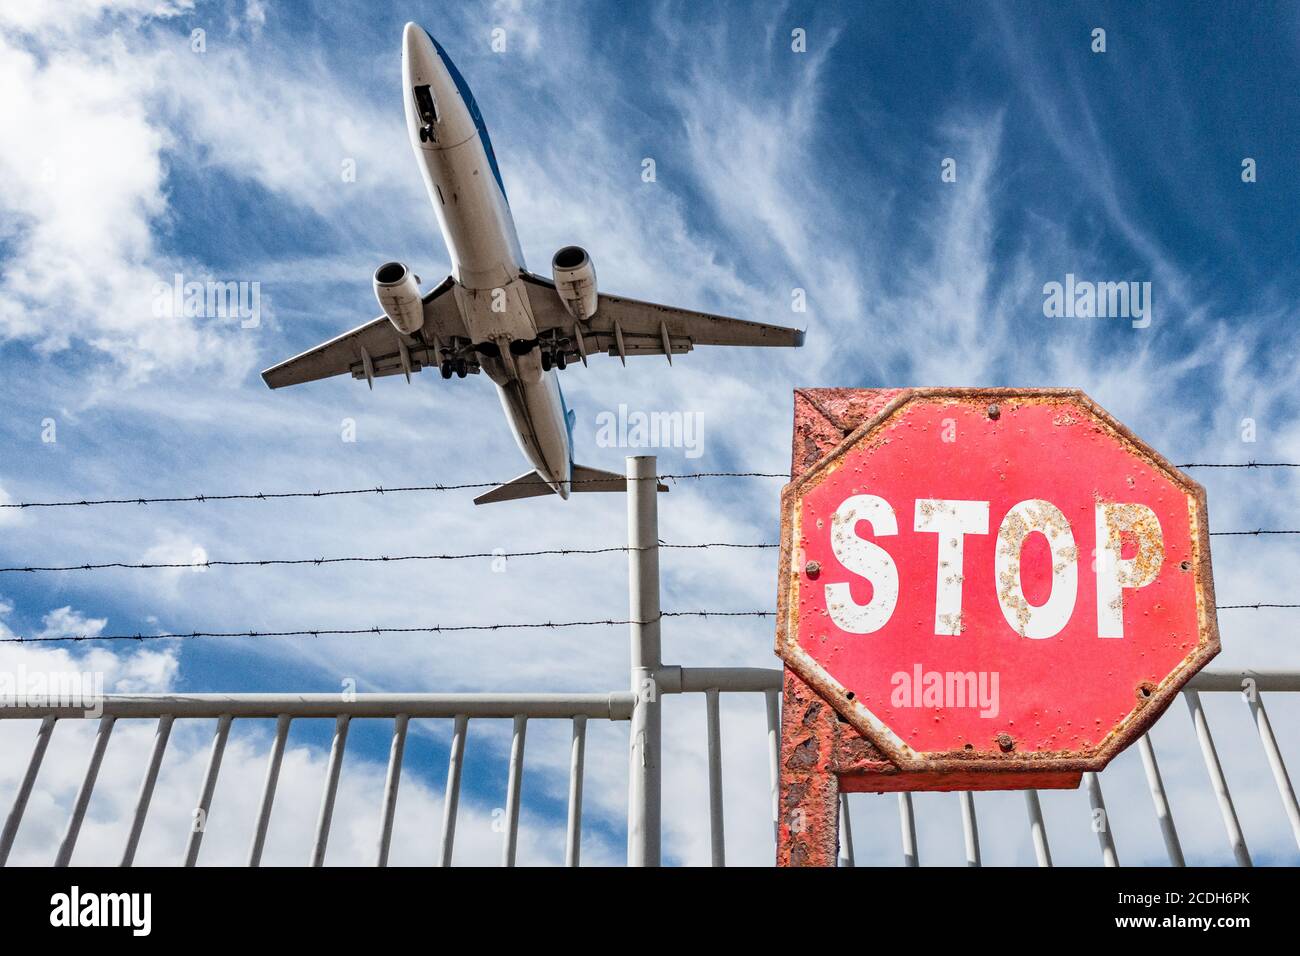 Flugzeug fliegt über Stacheldrahtzaun und Stoppschild. Konzeptbild: Ruanda-Migranten fliegen Ukraine Russland Konflikt, Flüchtlingskrise, Krieg... Stockfoto